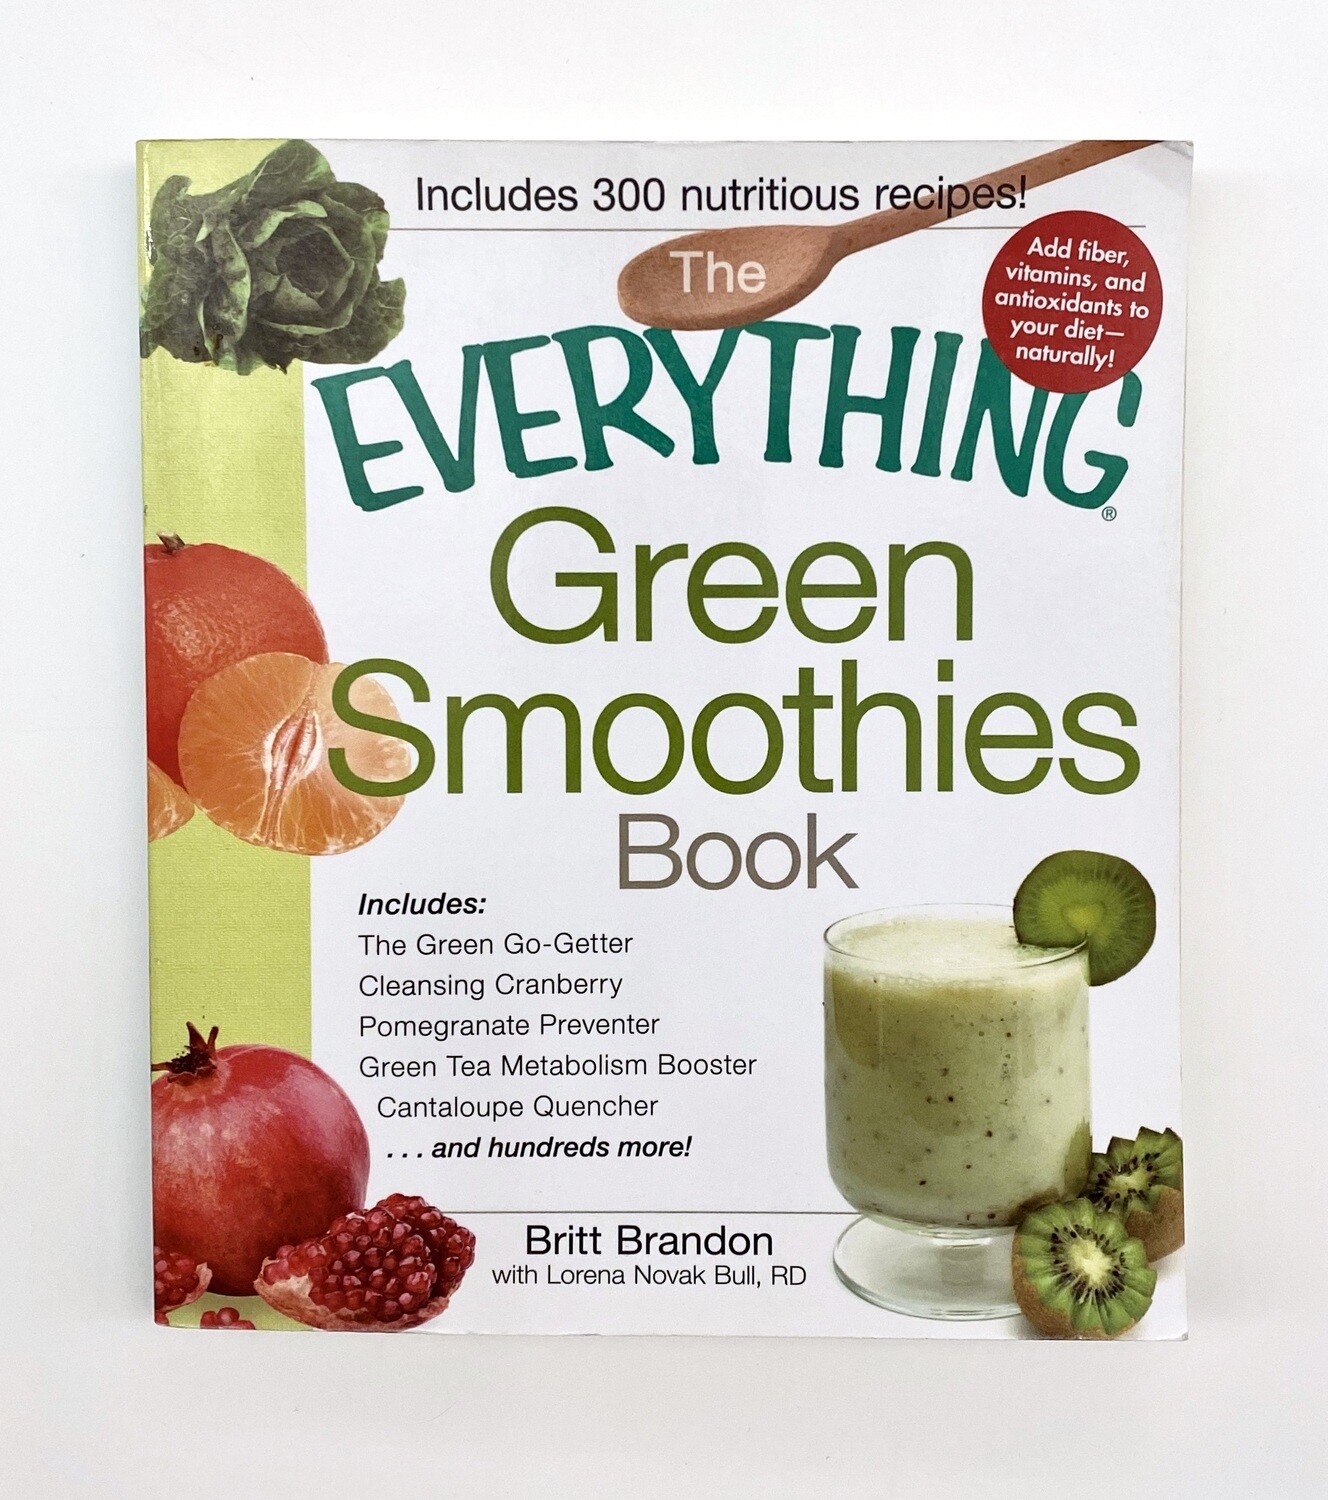 USED - Everything Green Smoothies Books, Britt Brandon